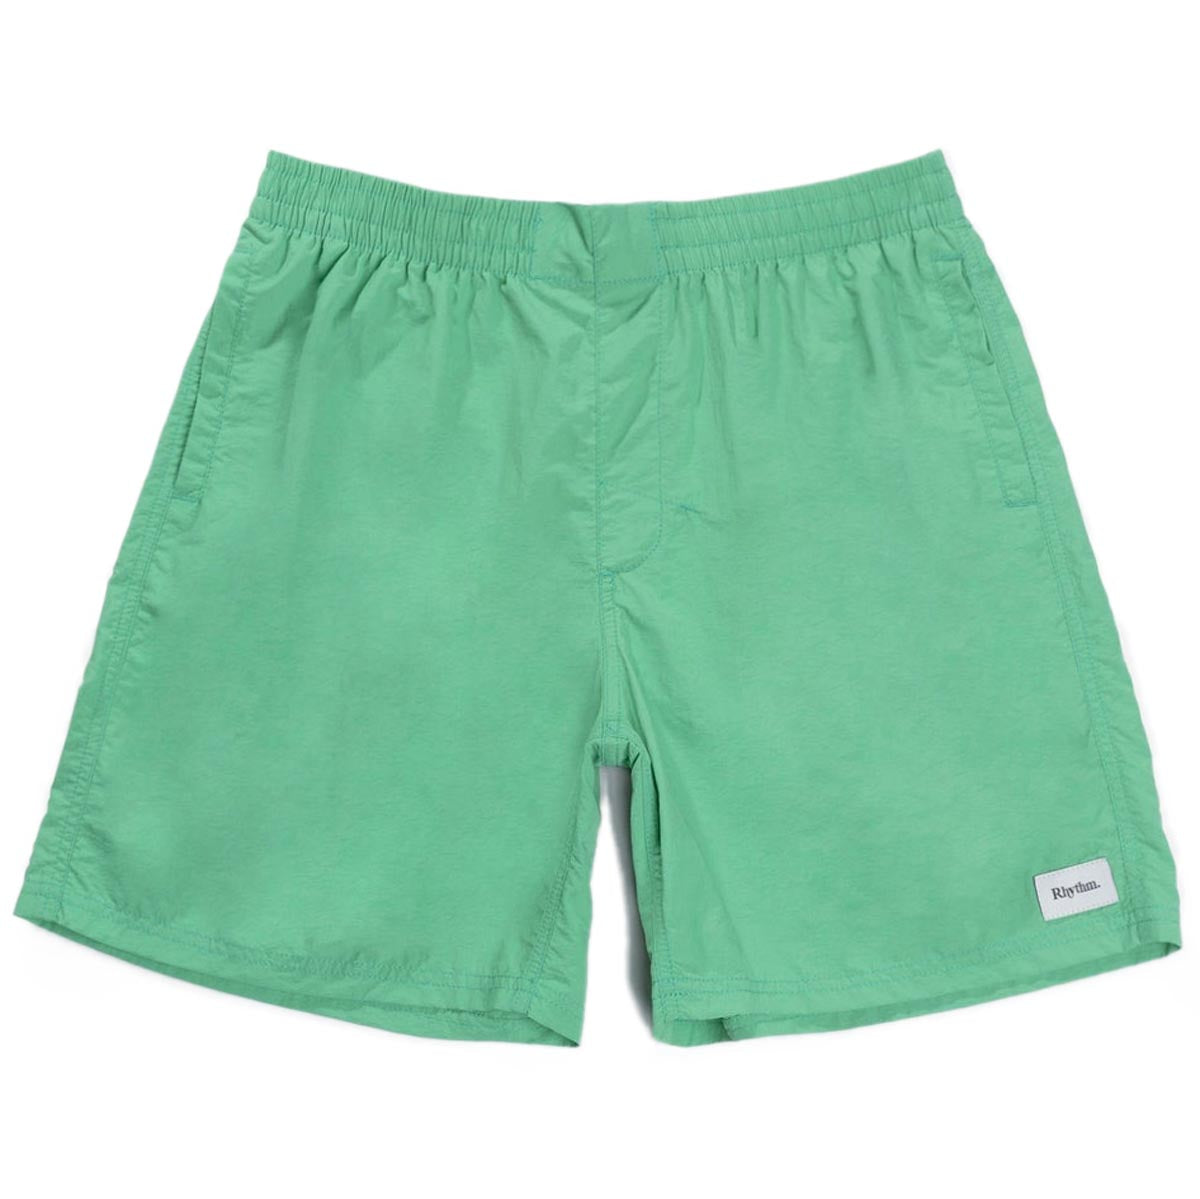 Rhythm Mod Sport Jam Shorts - Sea Green image 1